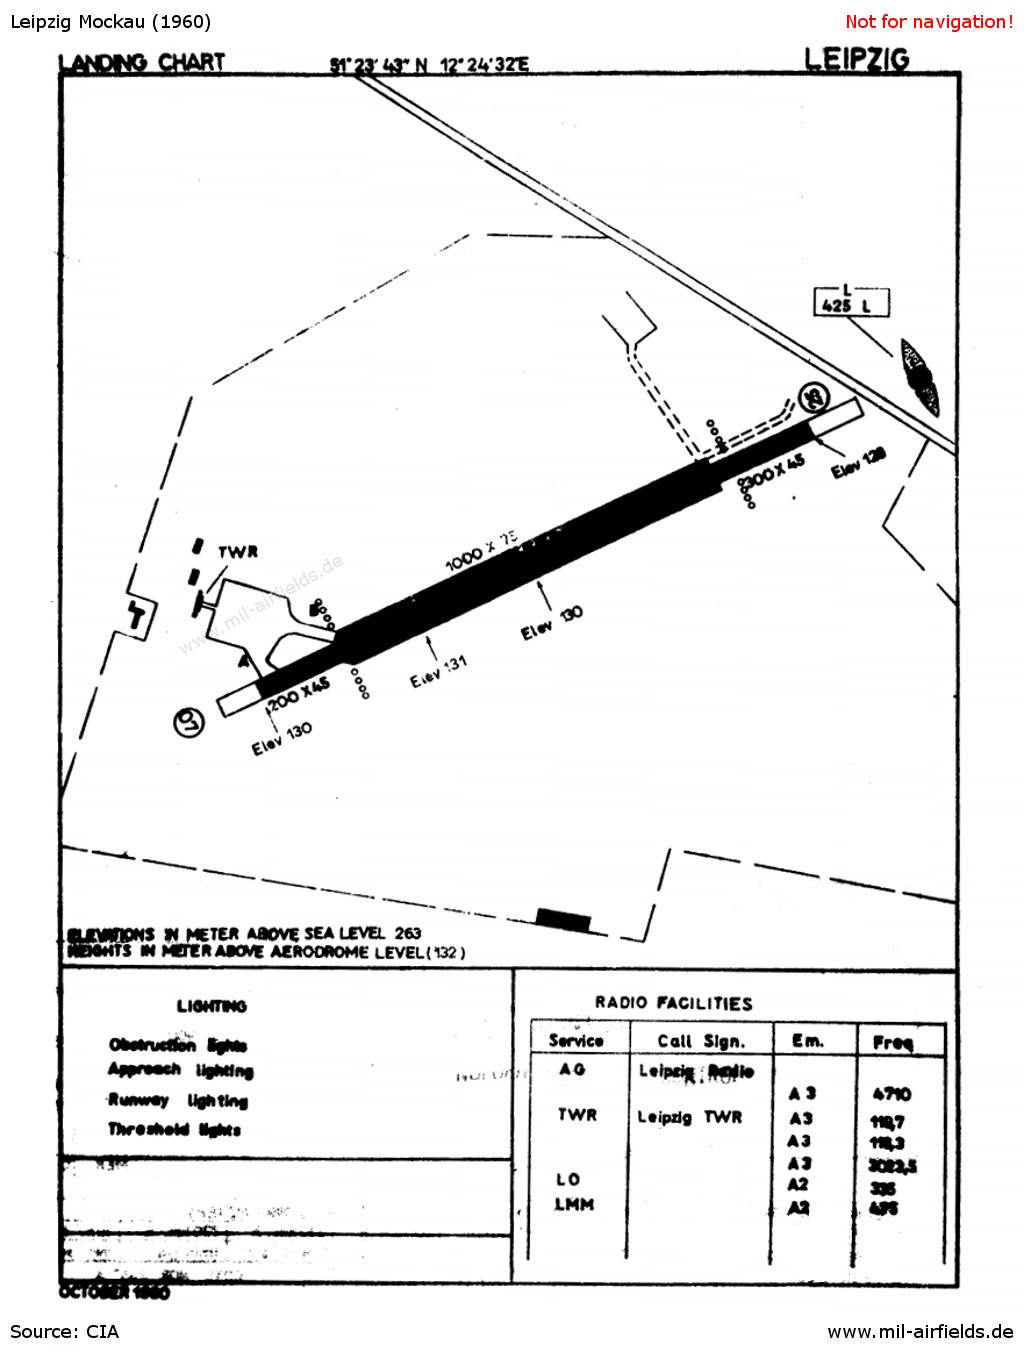 Chart of Leipzig Mockau Airport from 1960